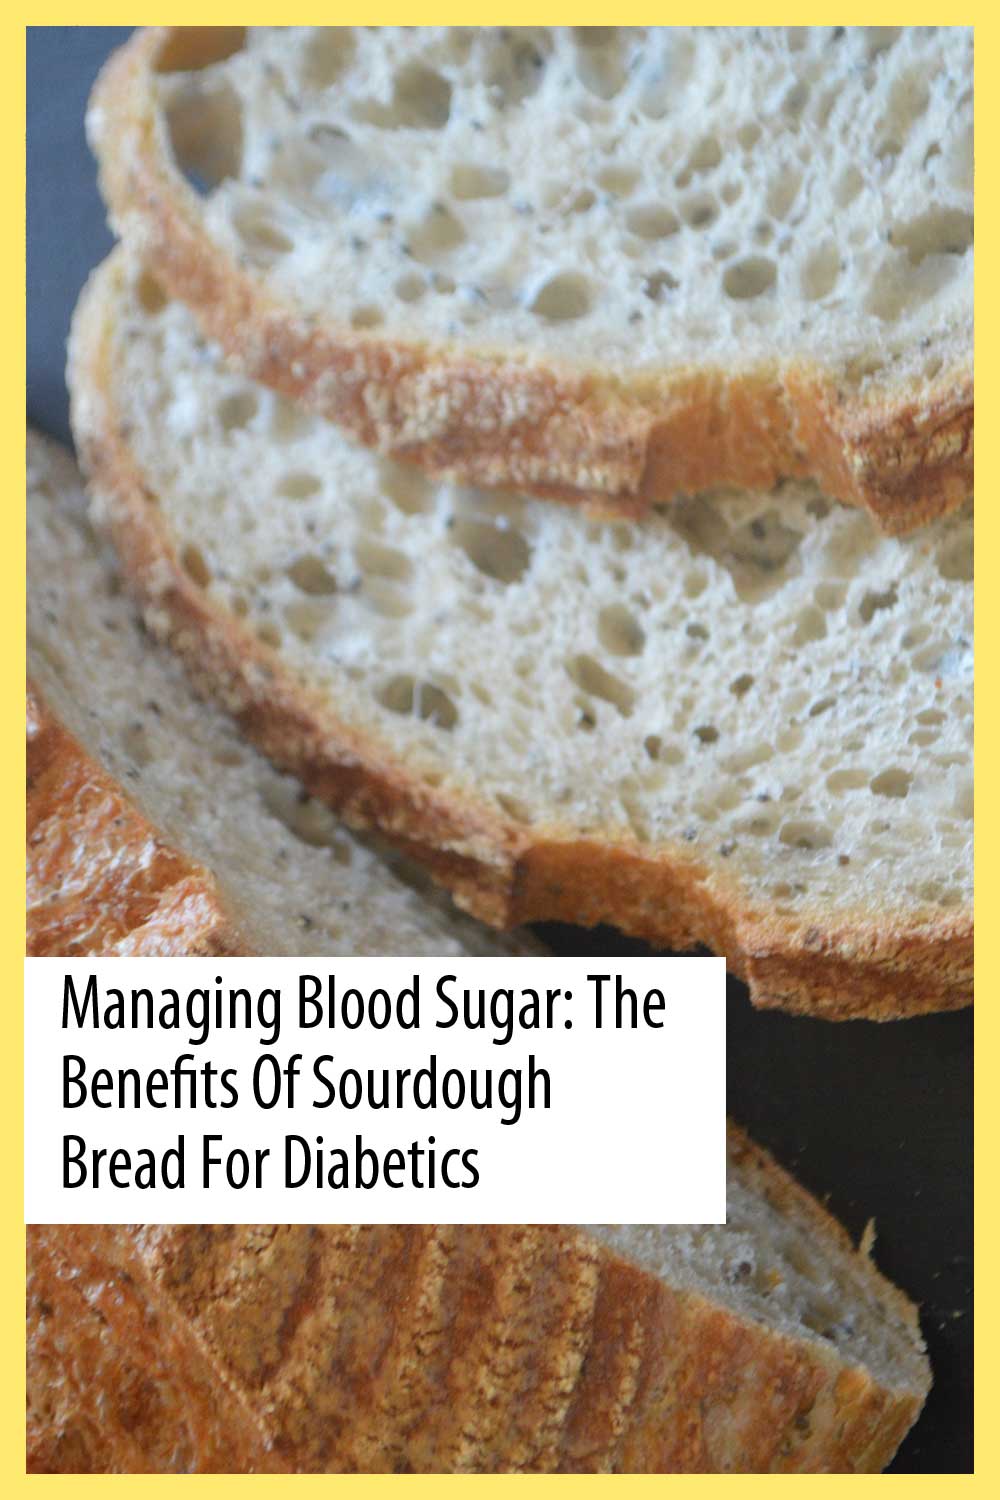 Managing Blood Sugar: The Benefits of Sourdough Bread for Diabetics